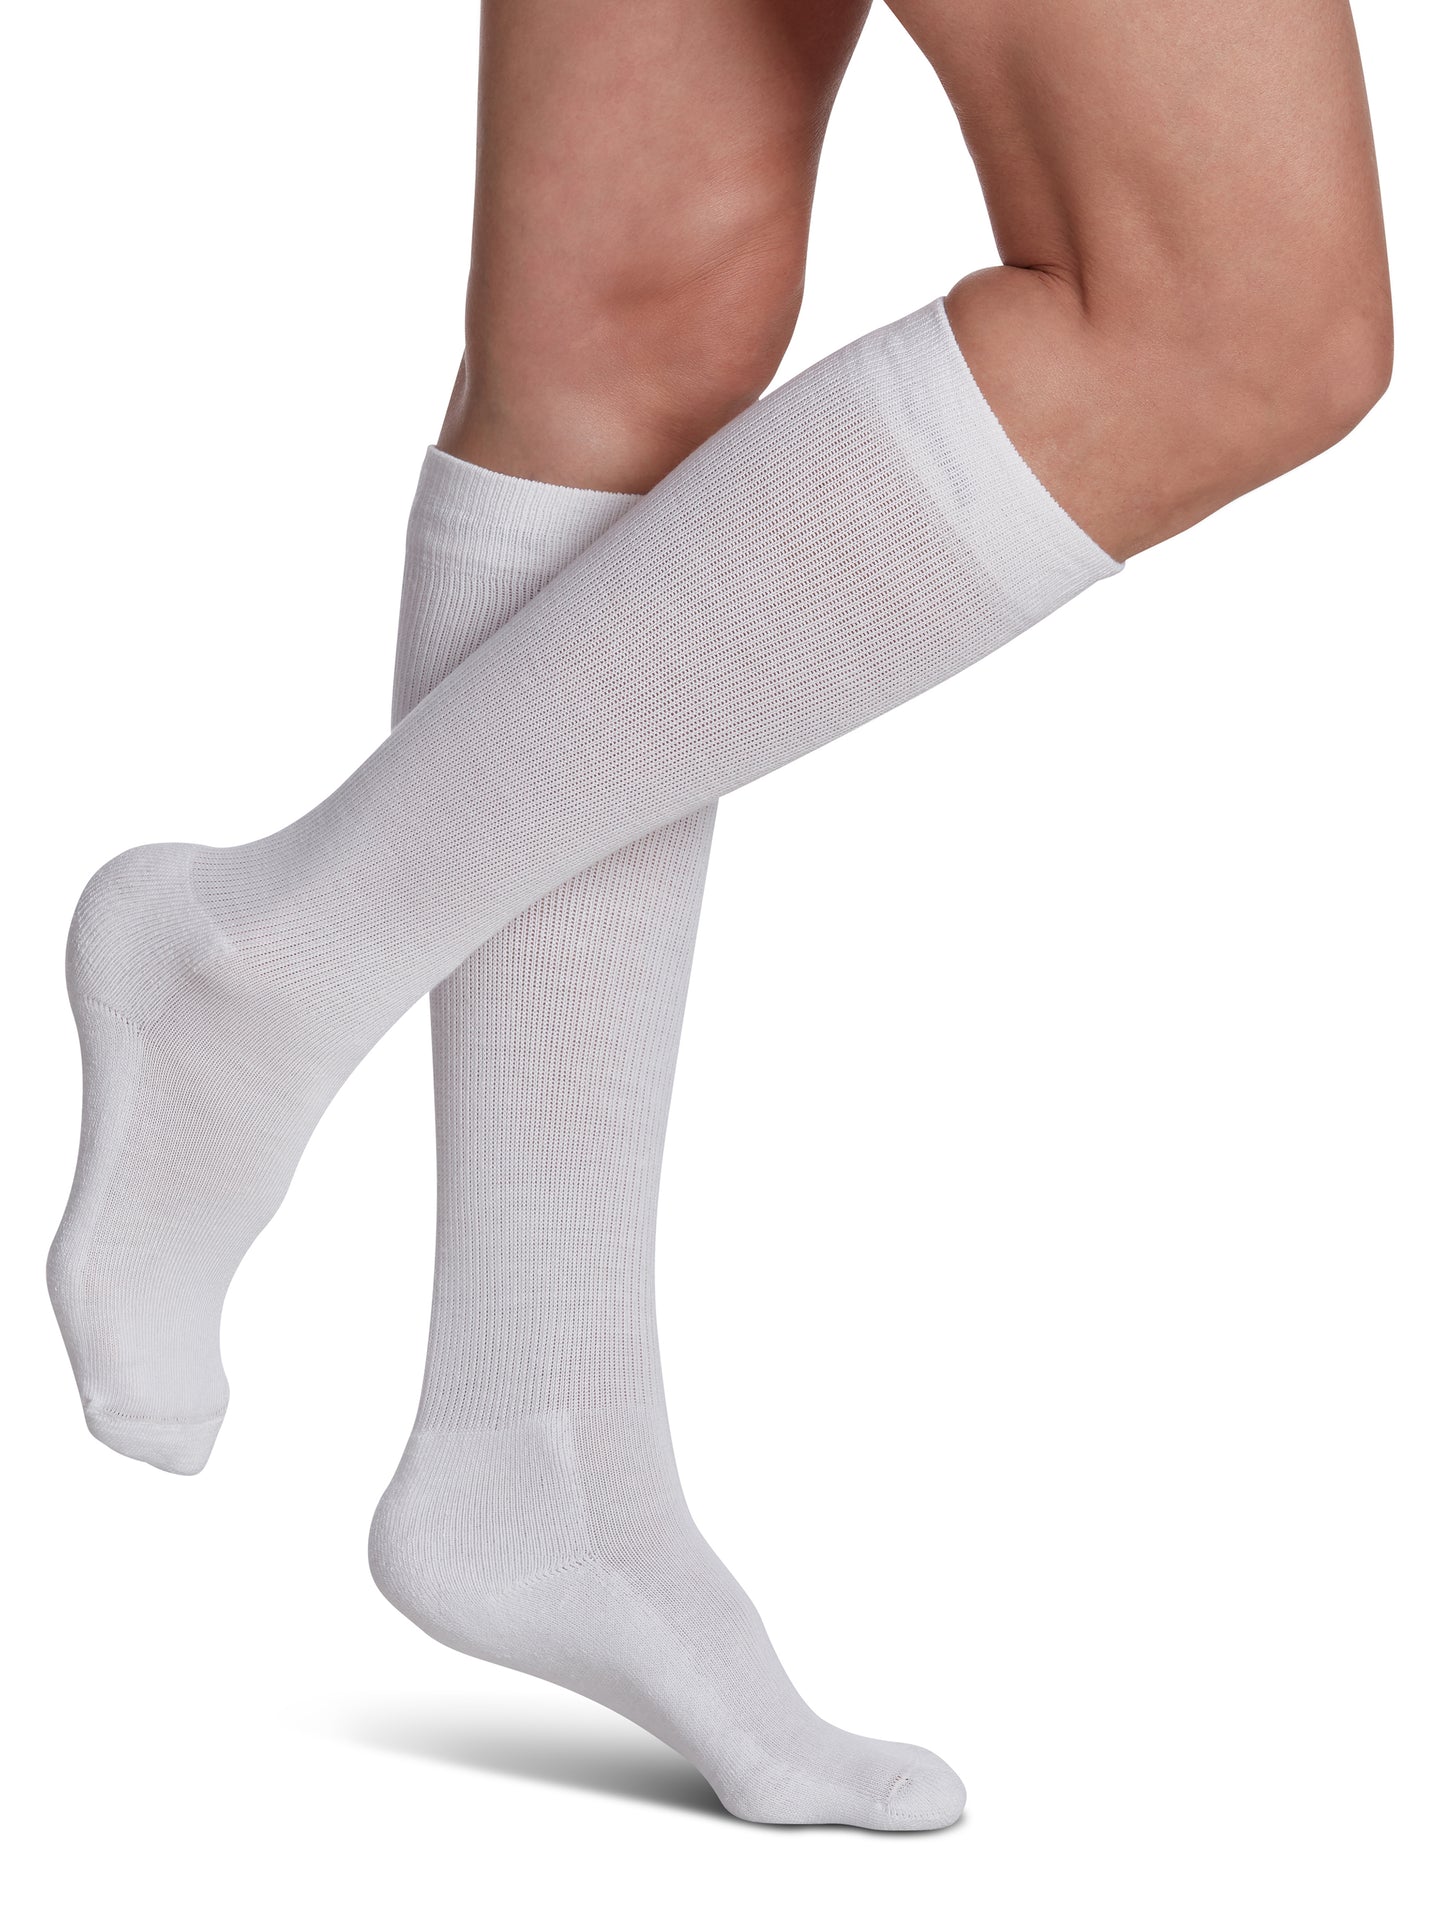 Sigvaris EverSoft Diabetic Sock 8-15mmHg